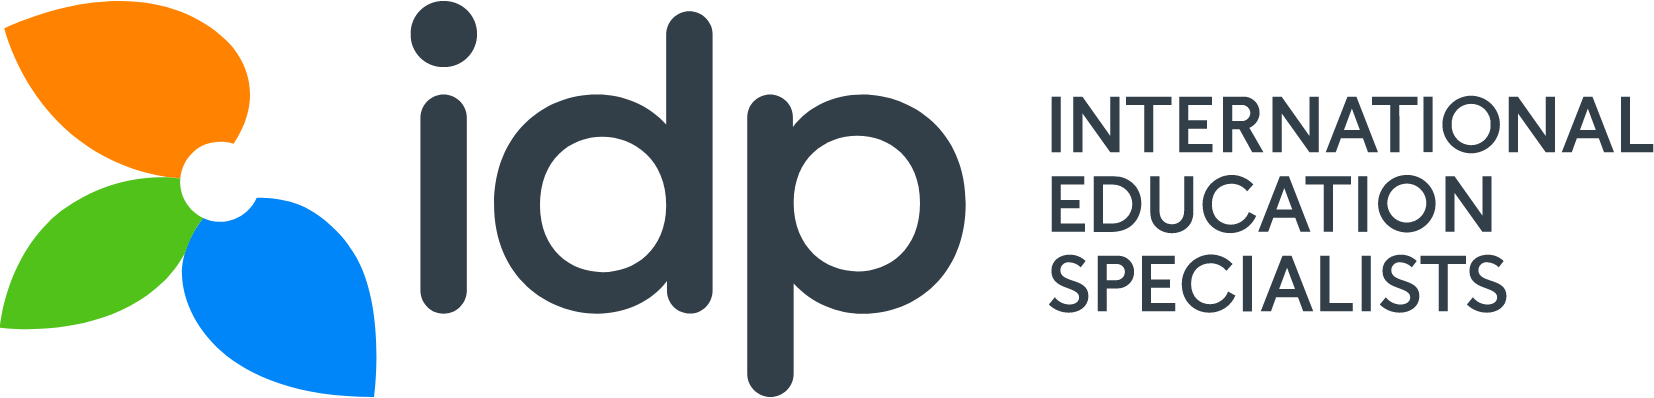 IDP Education logo large (transparent PNG)